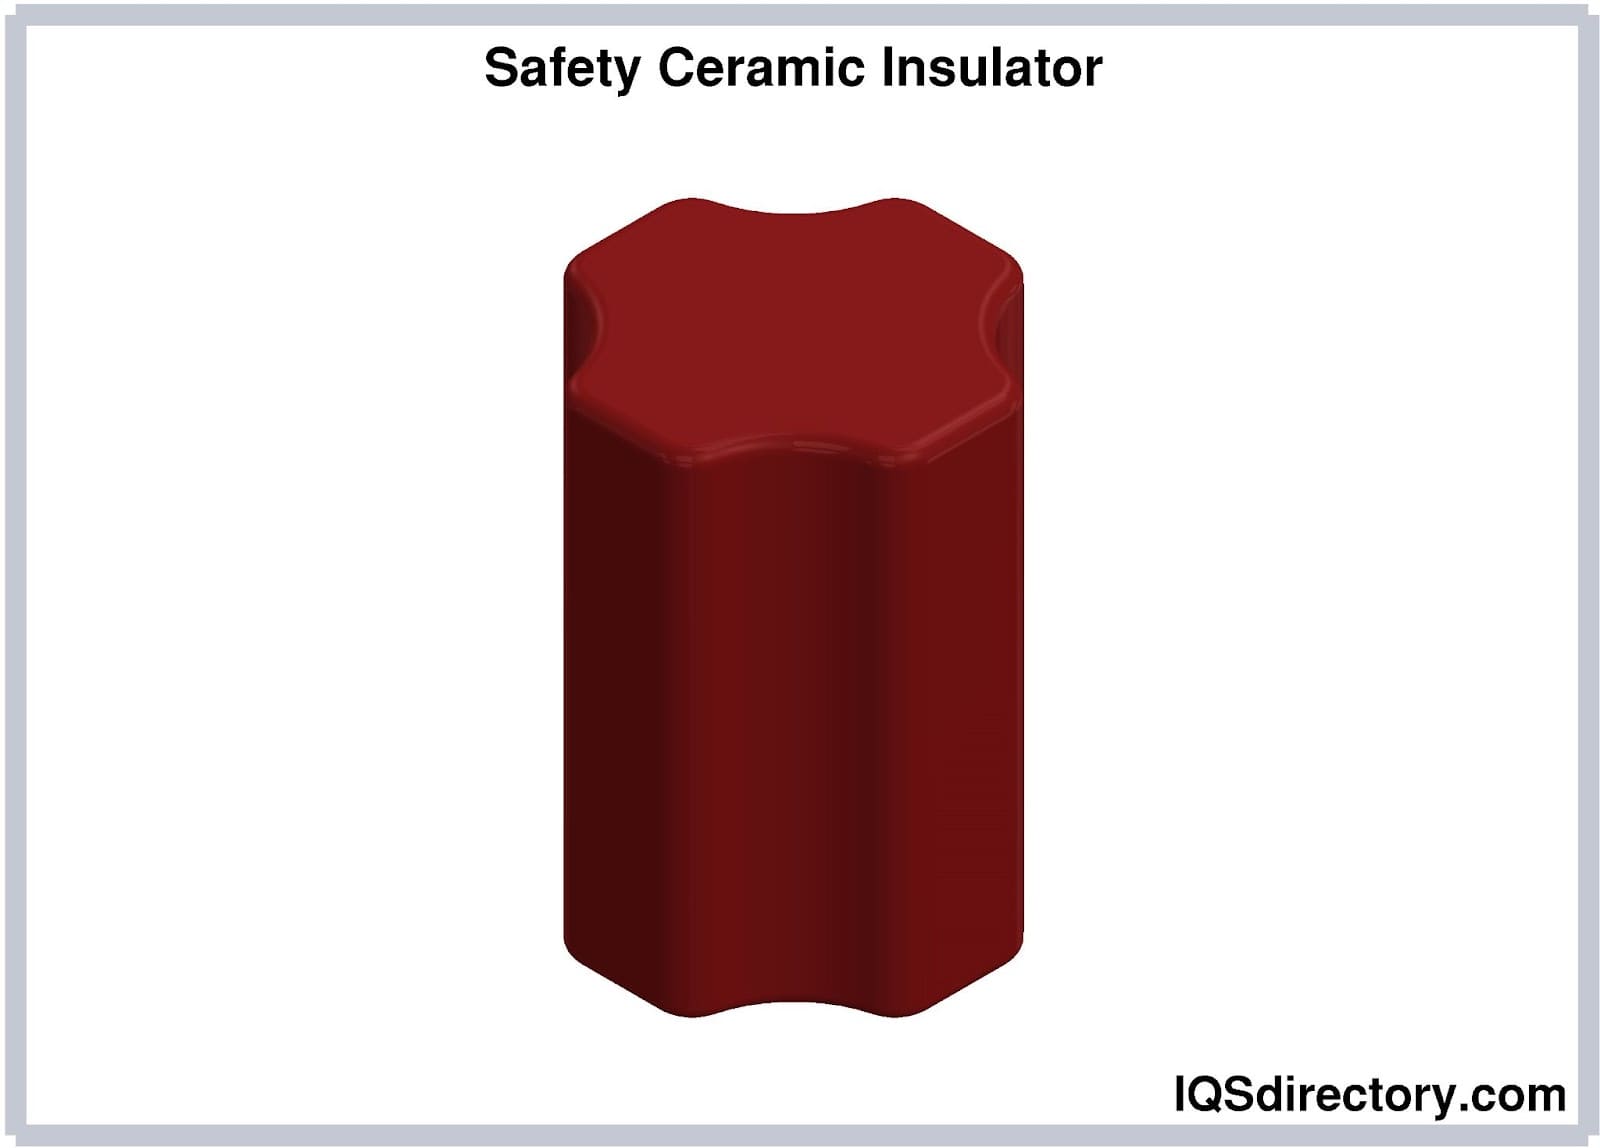 Safety Ceramic Insulator